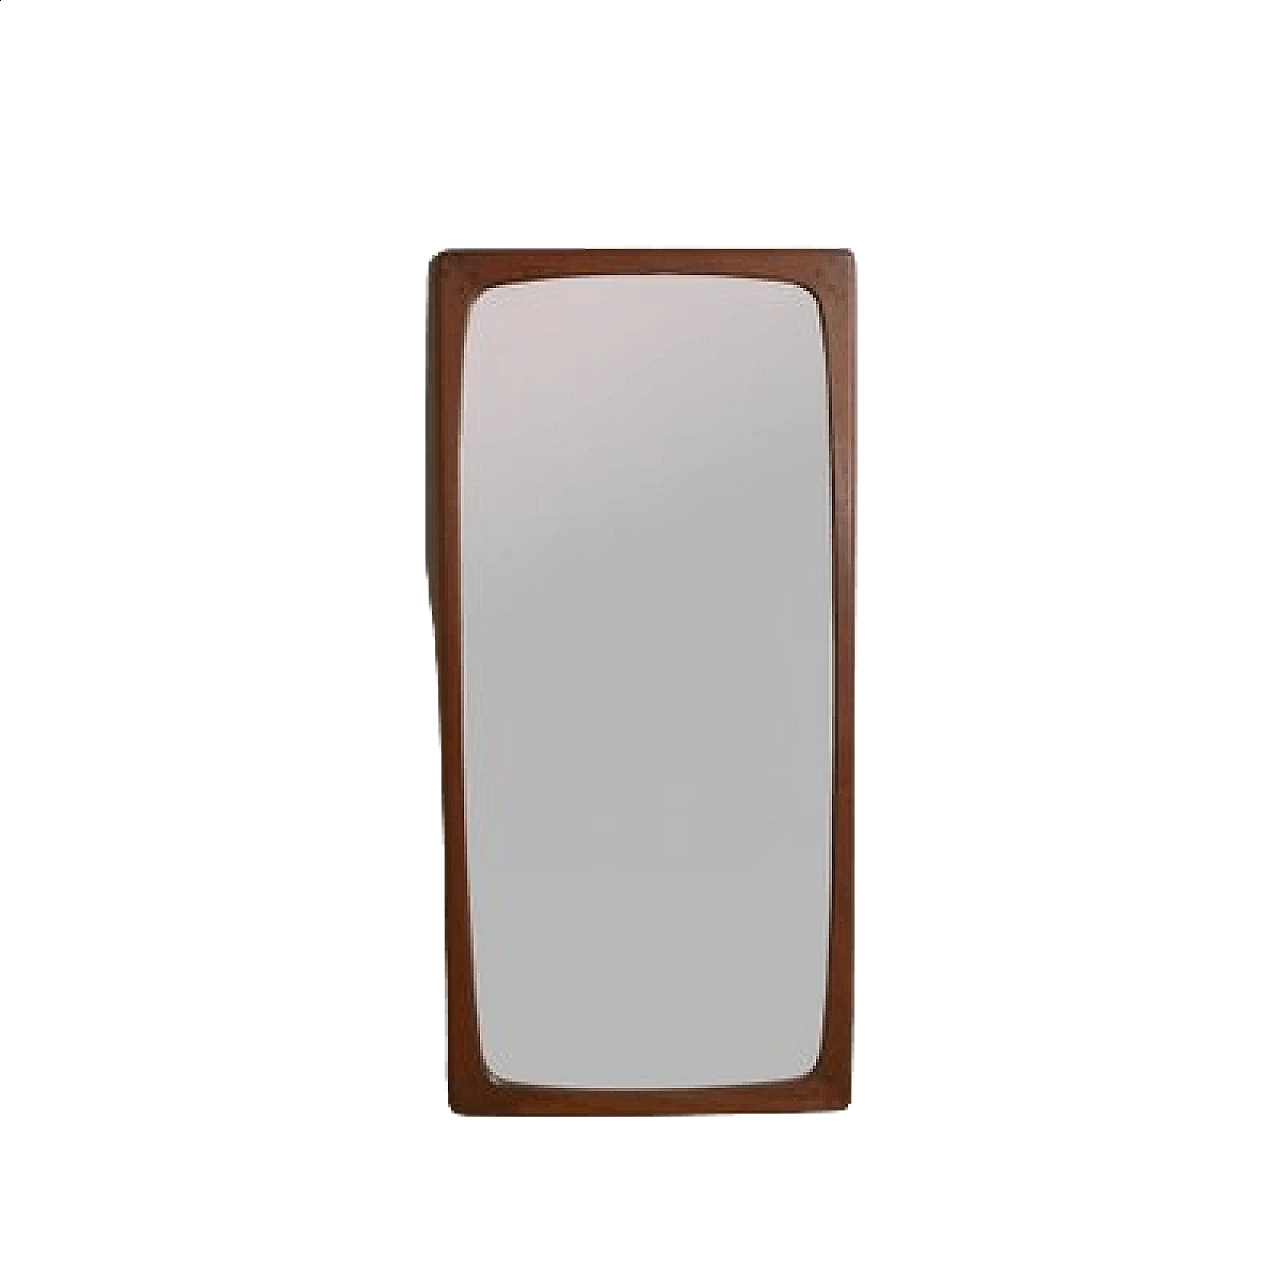 Rectangular Mirror with wood Frame from Isa Bergamo, 1960s 1456418